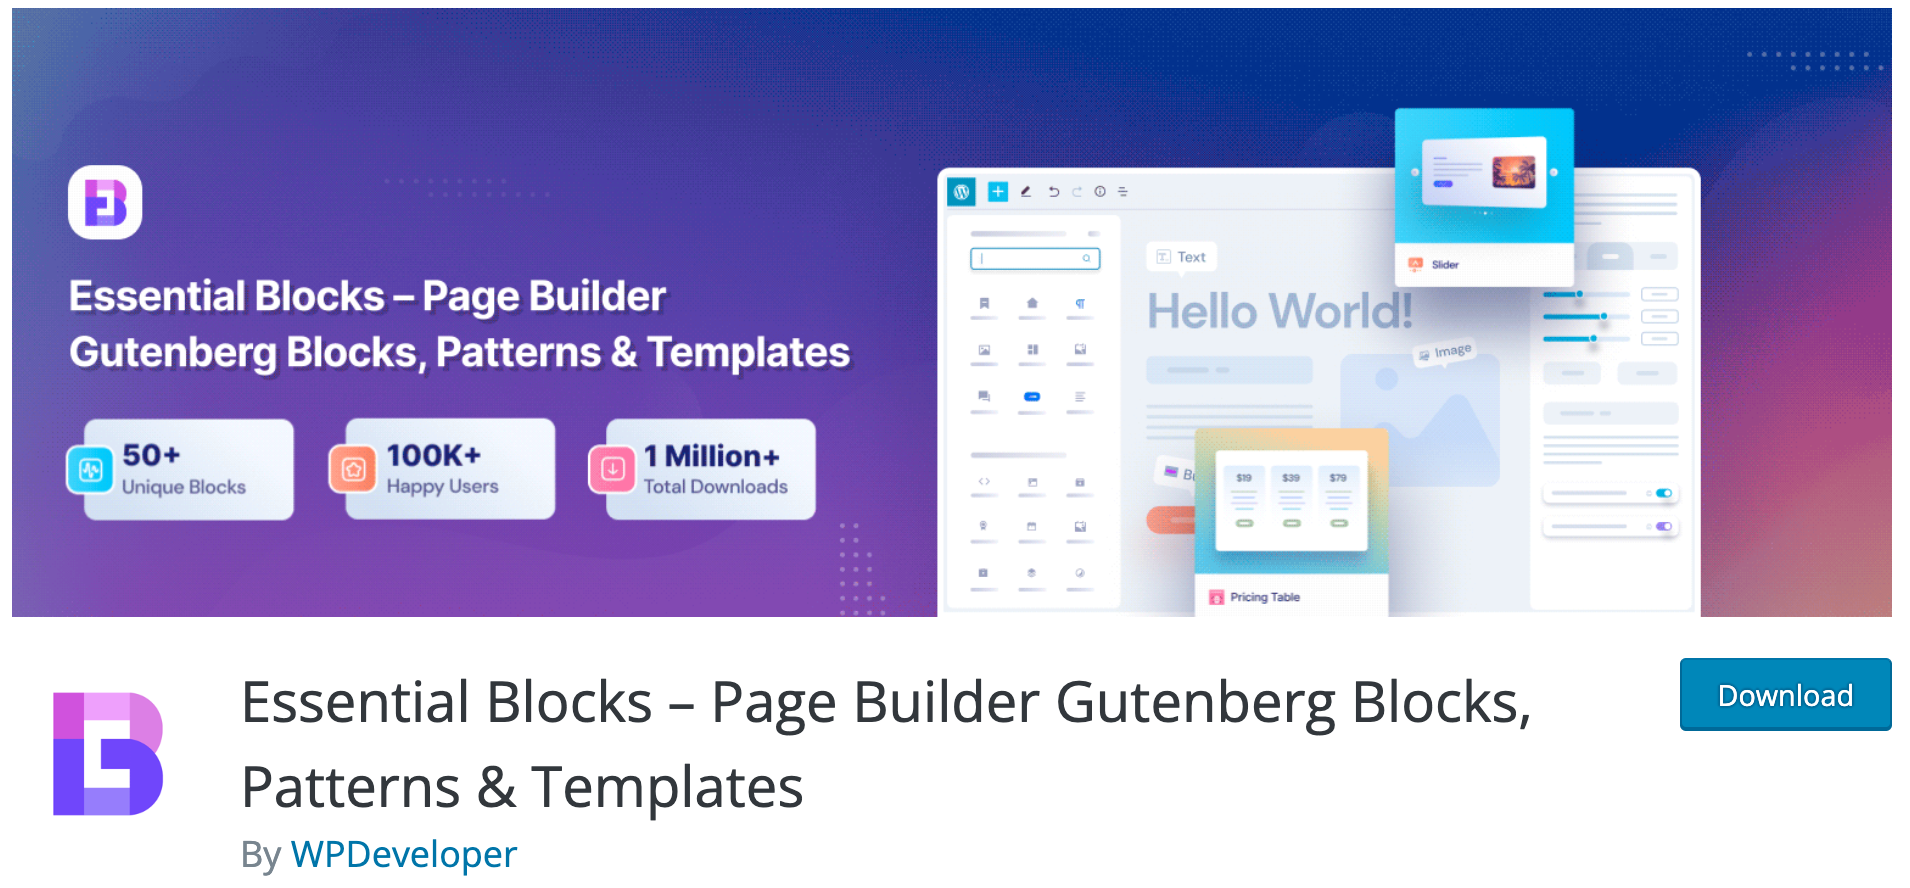 WordPress Gutenberg Block Plugin: Essential Blocks